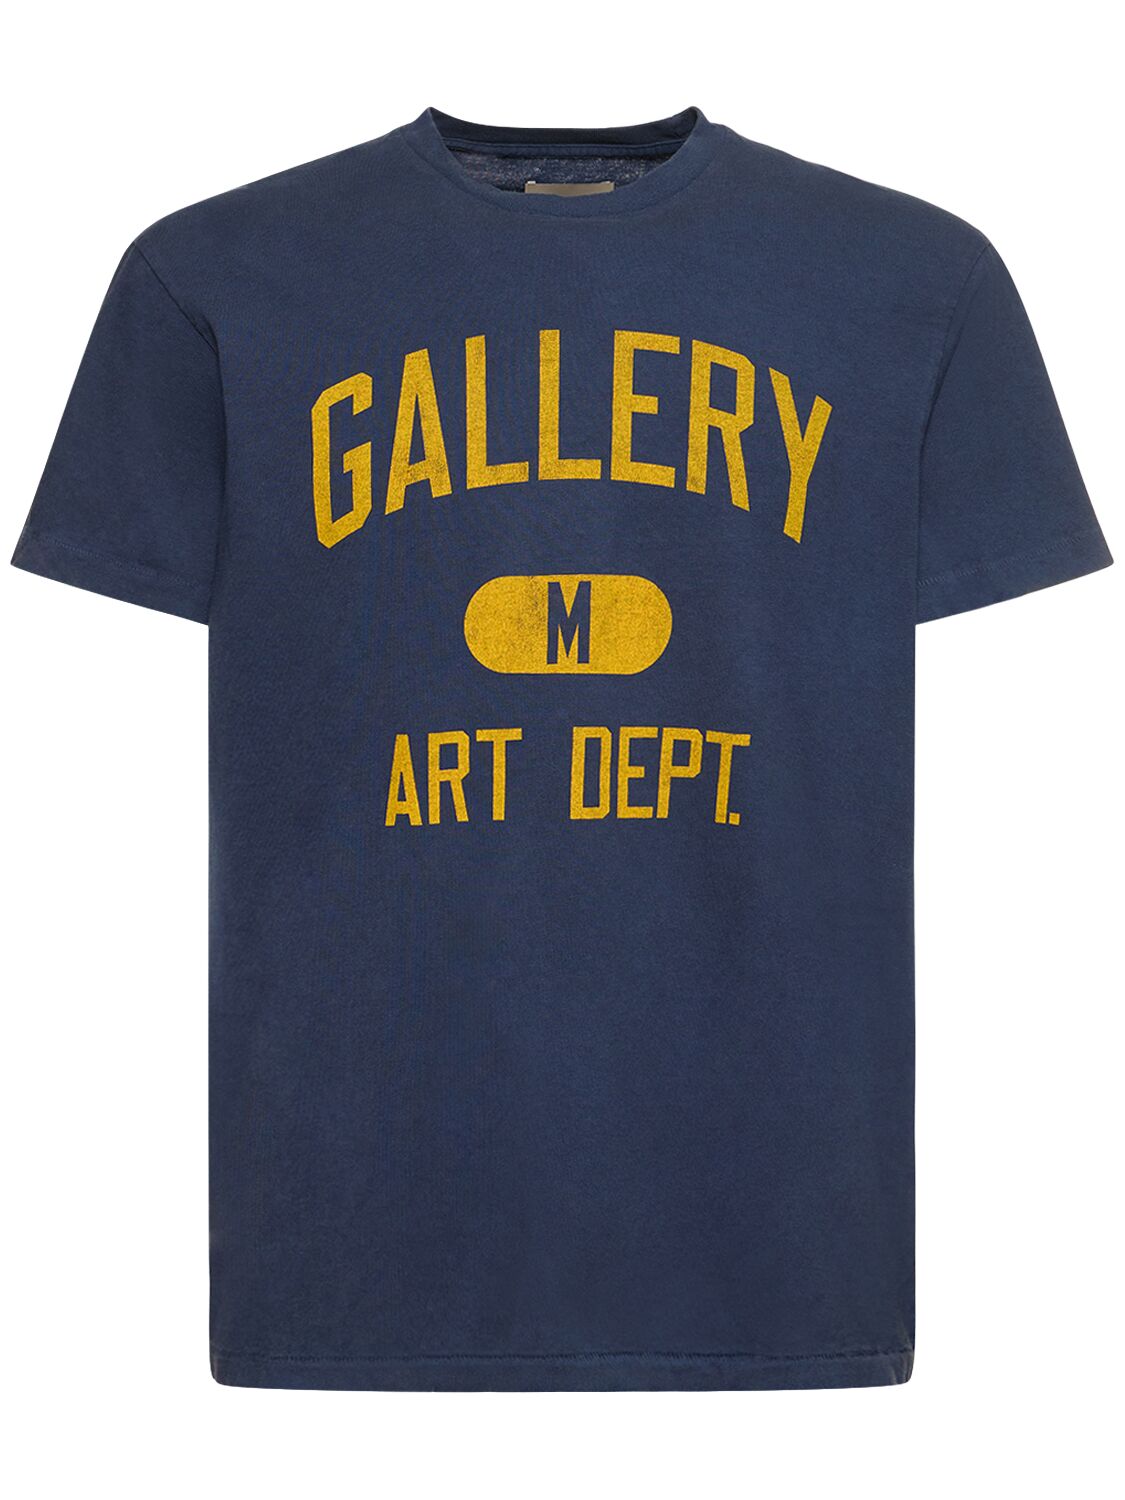 Art Dept. T-shirt – MEN > CLOTHING > T-SHIRTS